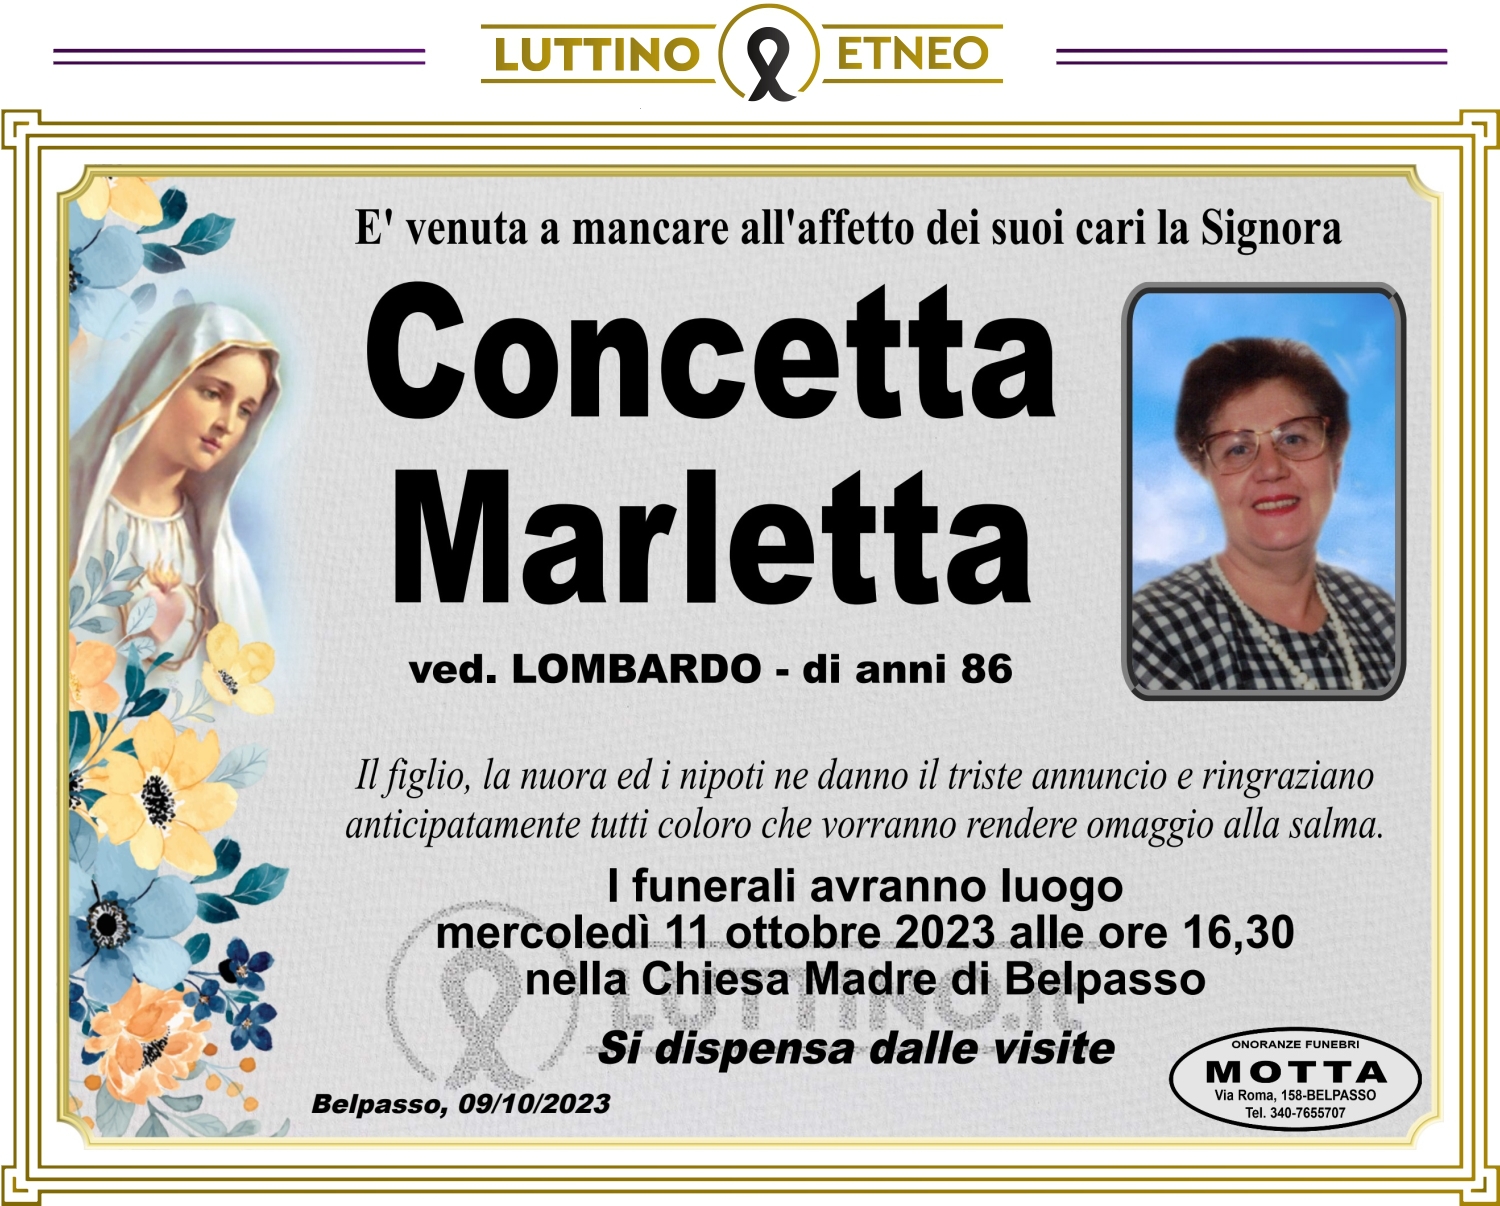 Concetta Marletta